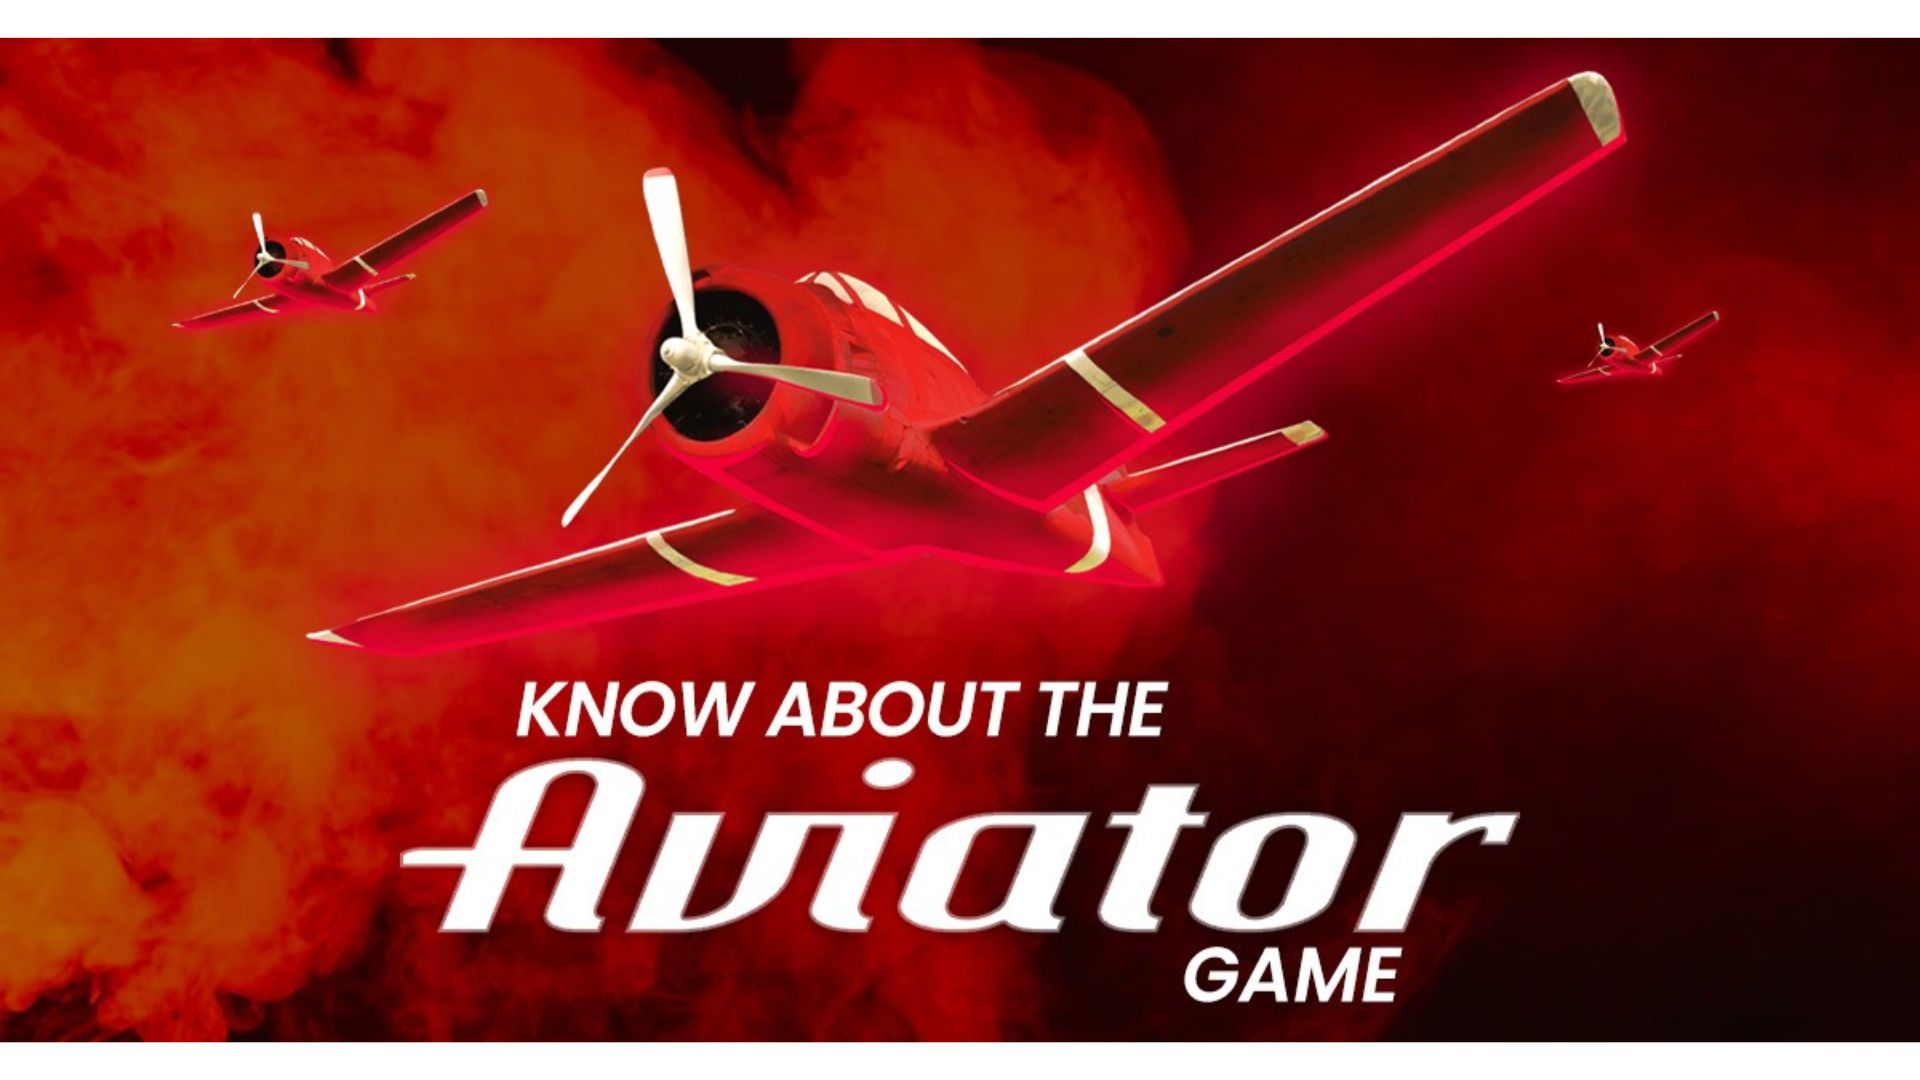 Highlights of Aviator Game